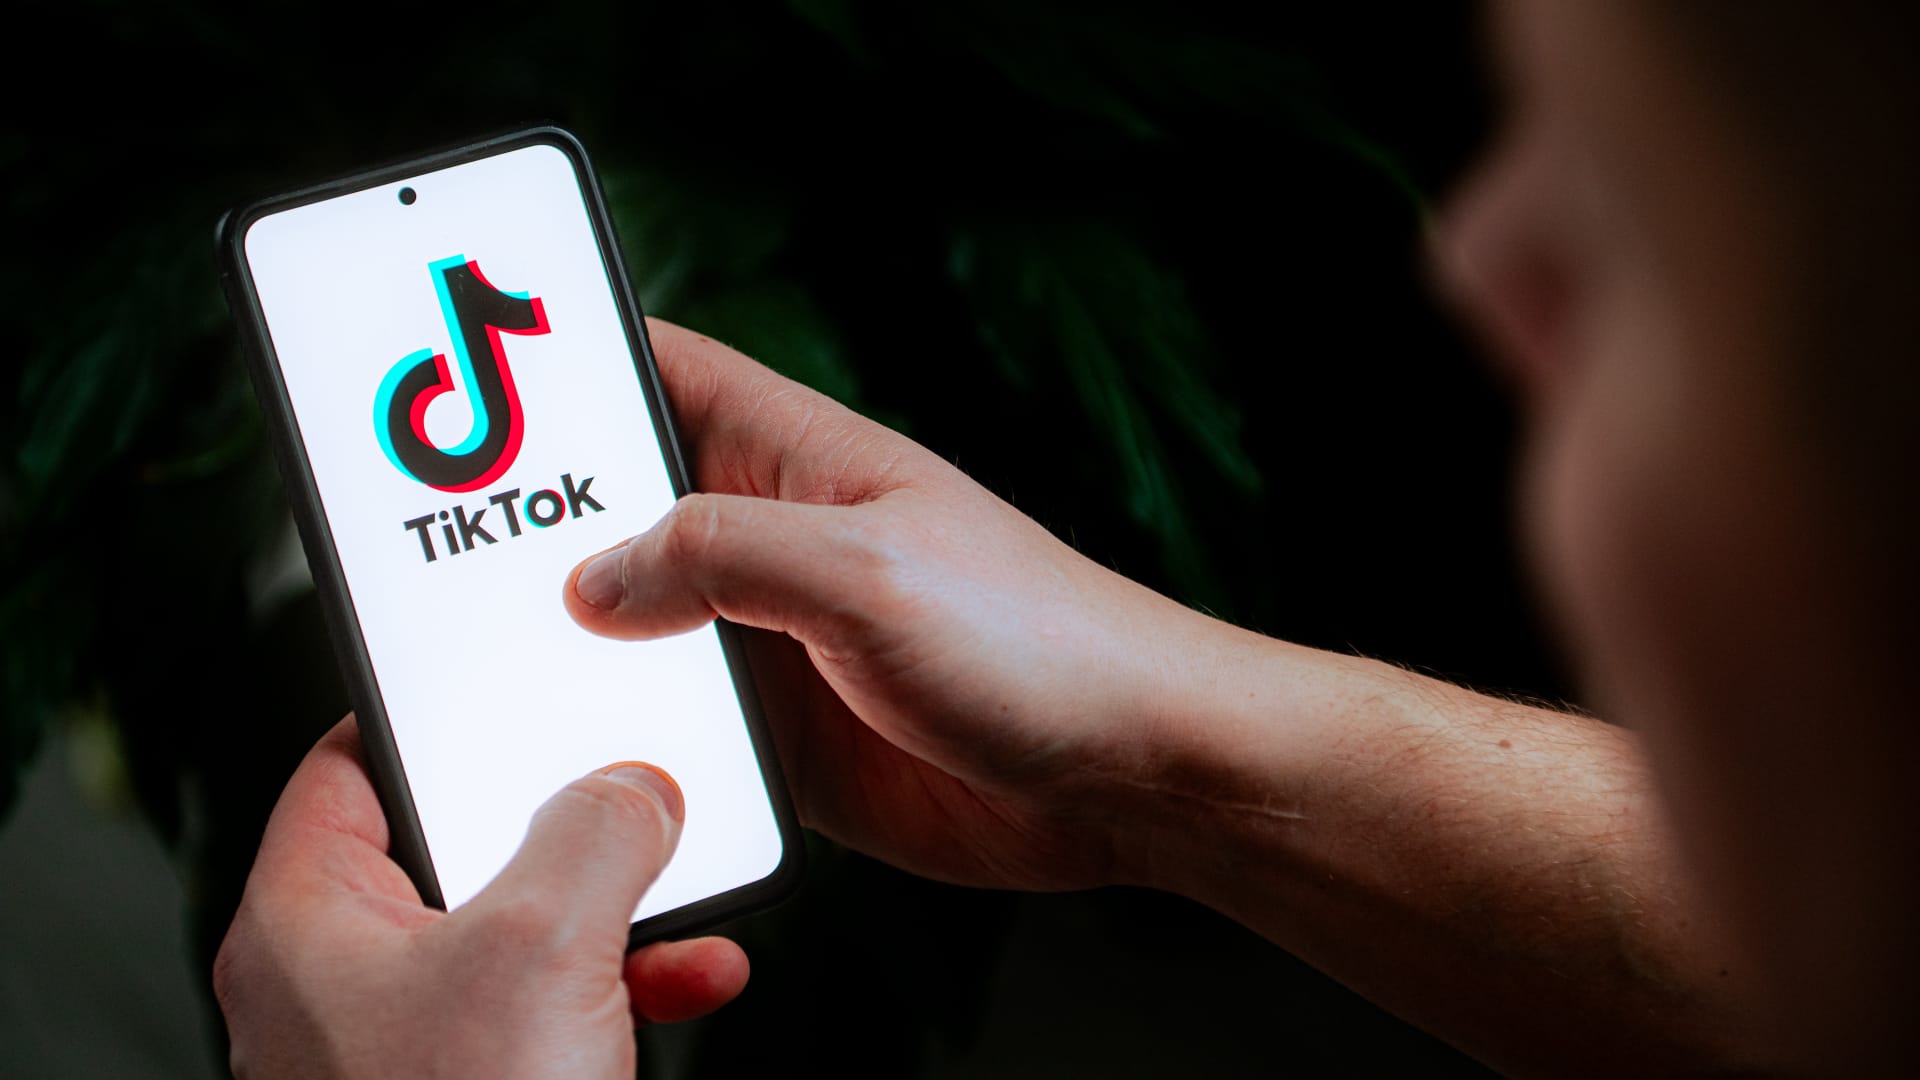 TikTok faces more heat in Washington, as House members introduce legislation demanding ByteDance divestiture